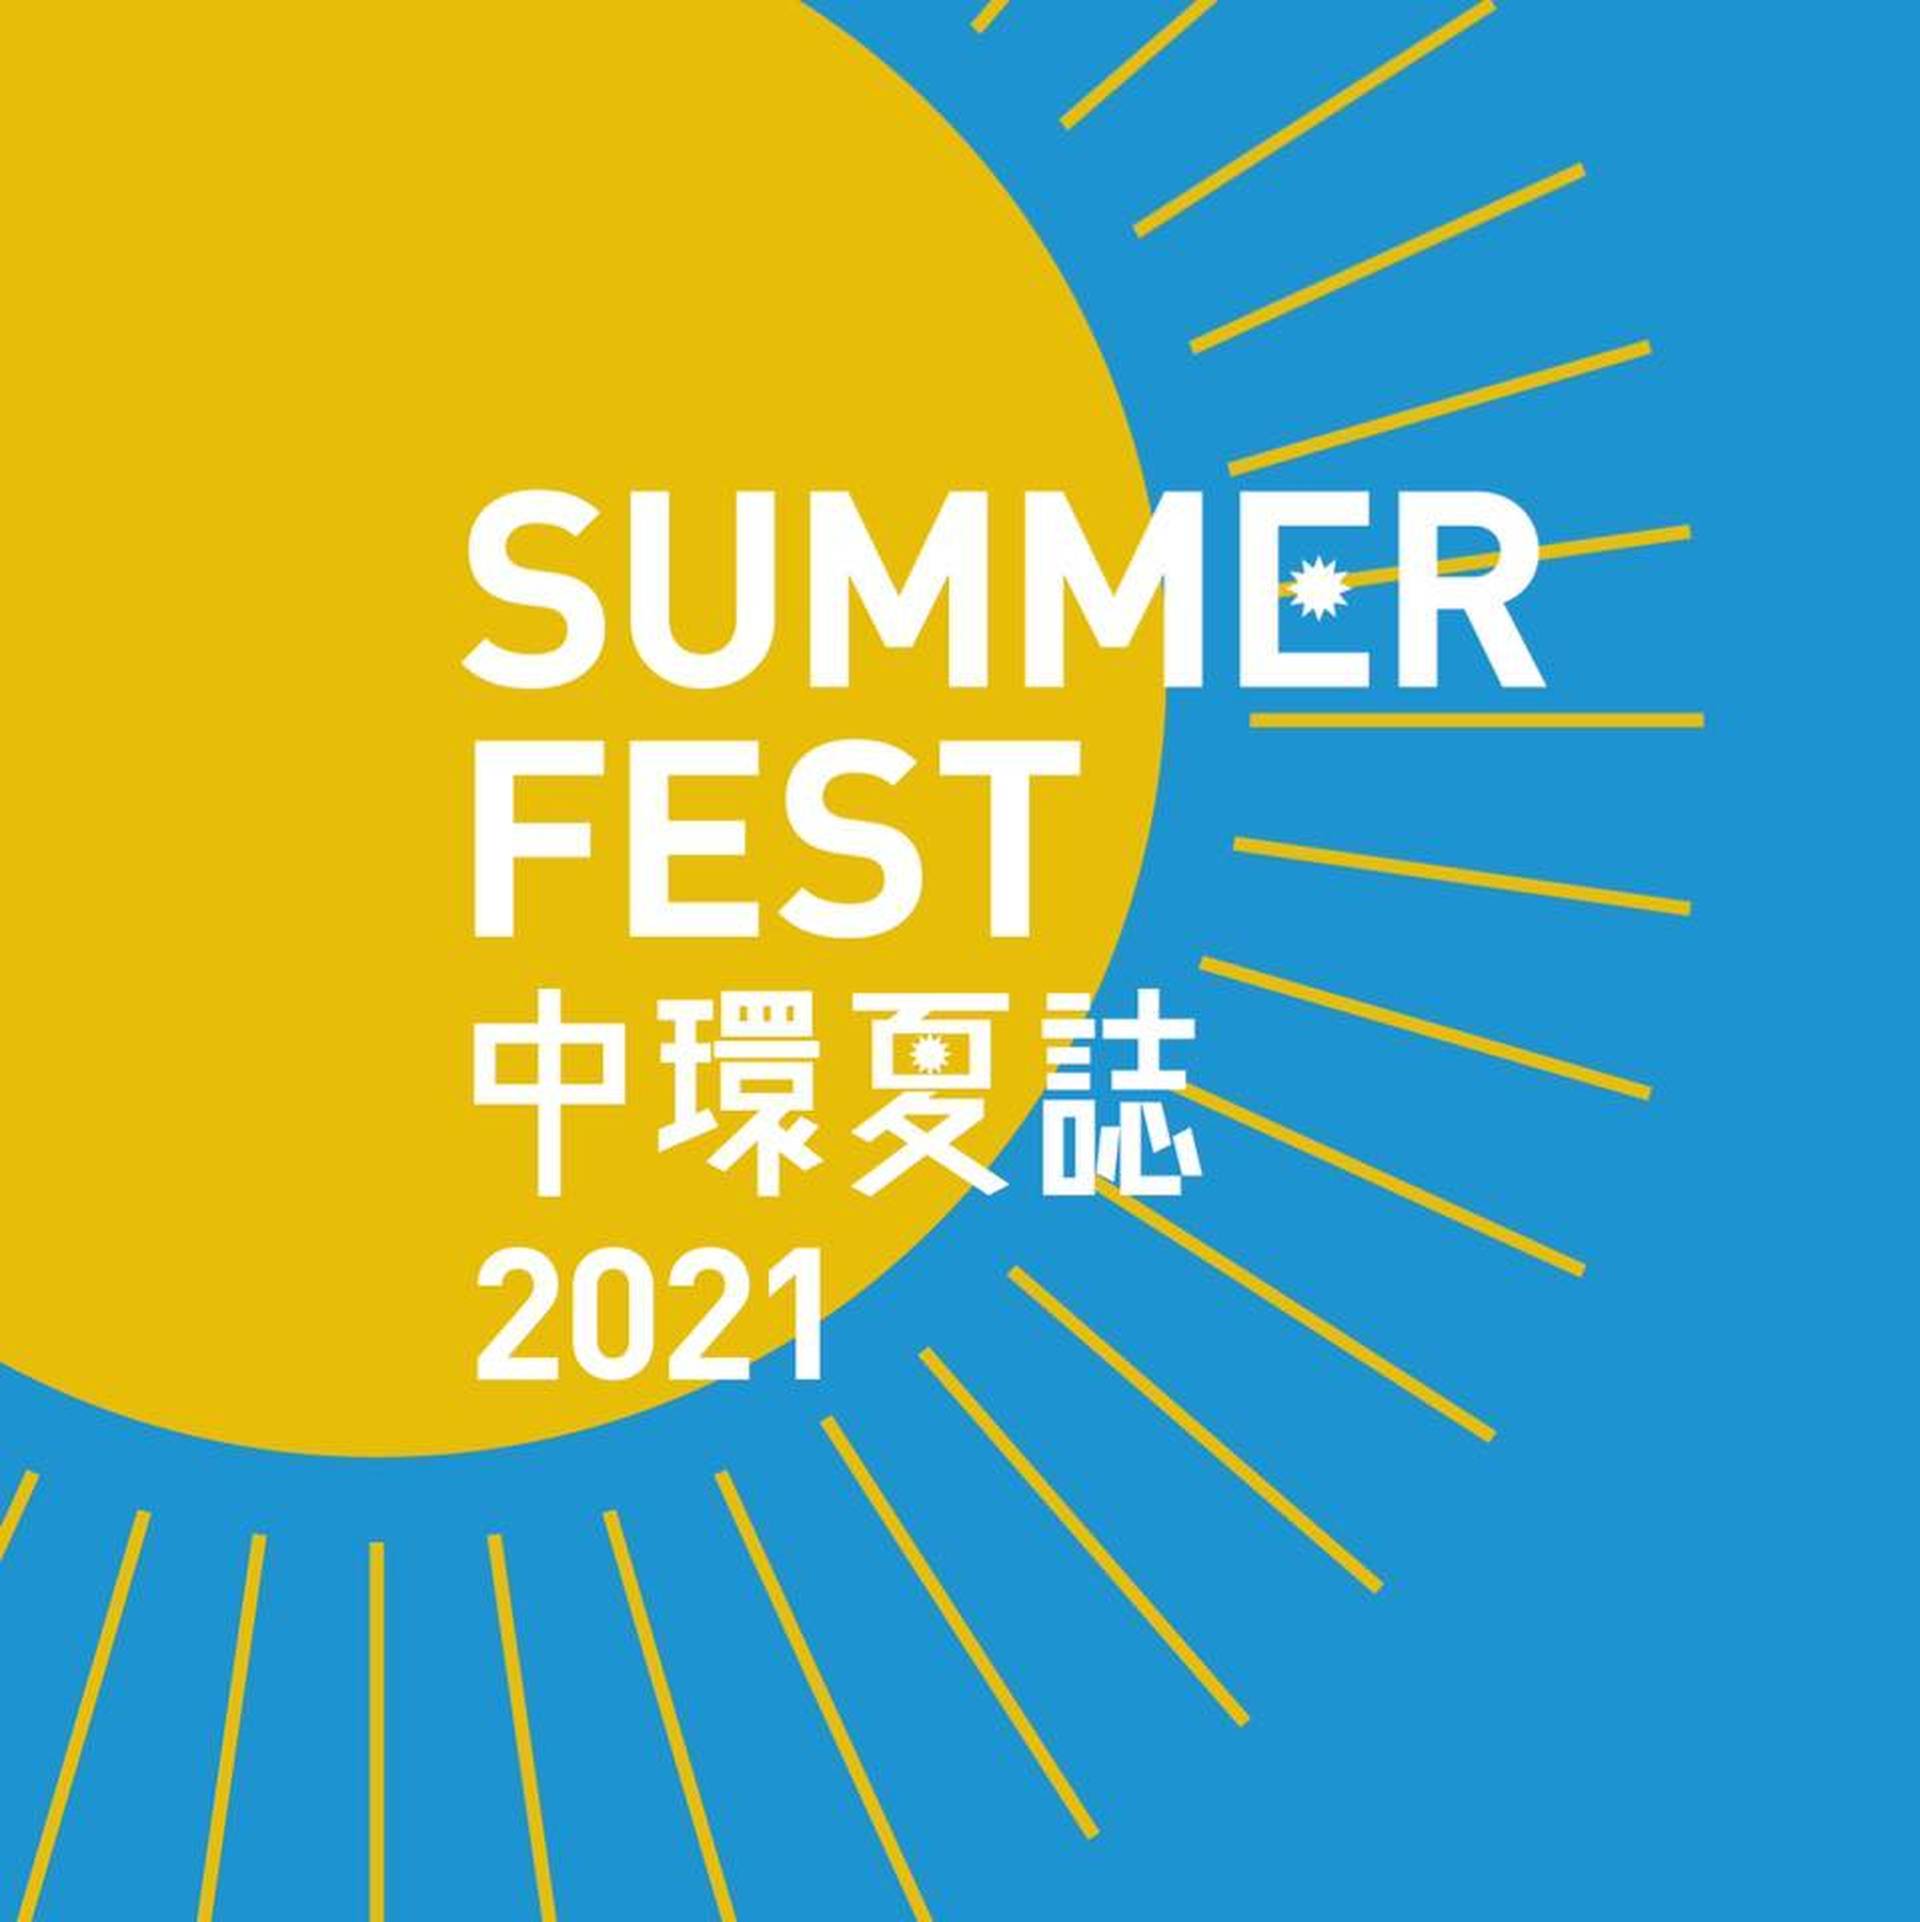 SummerFest 中環夏誌 2021